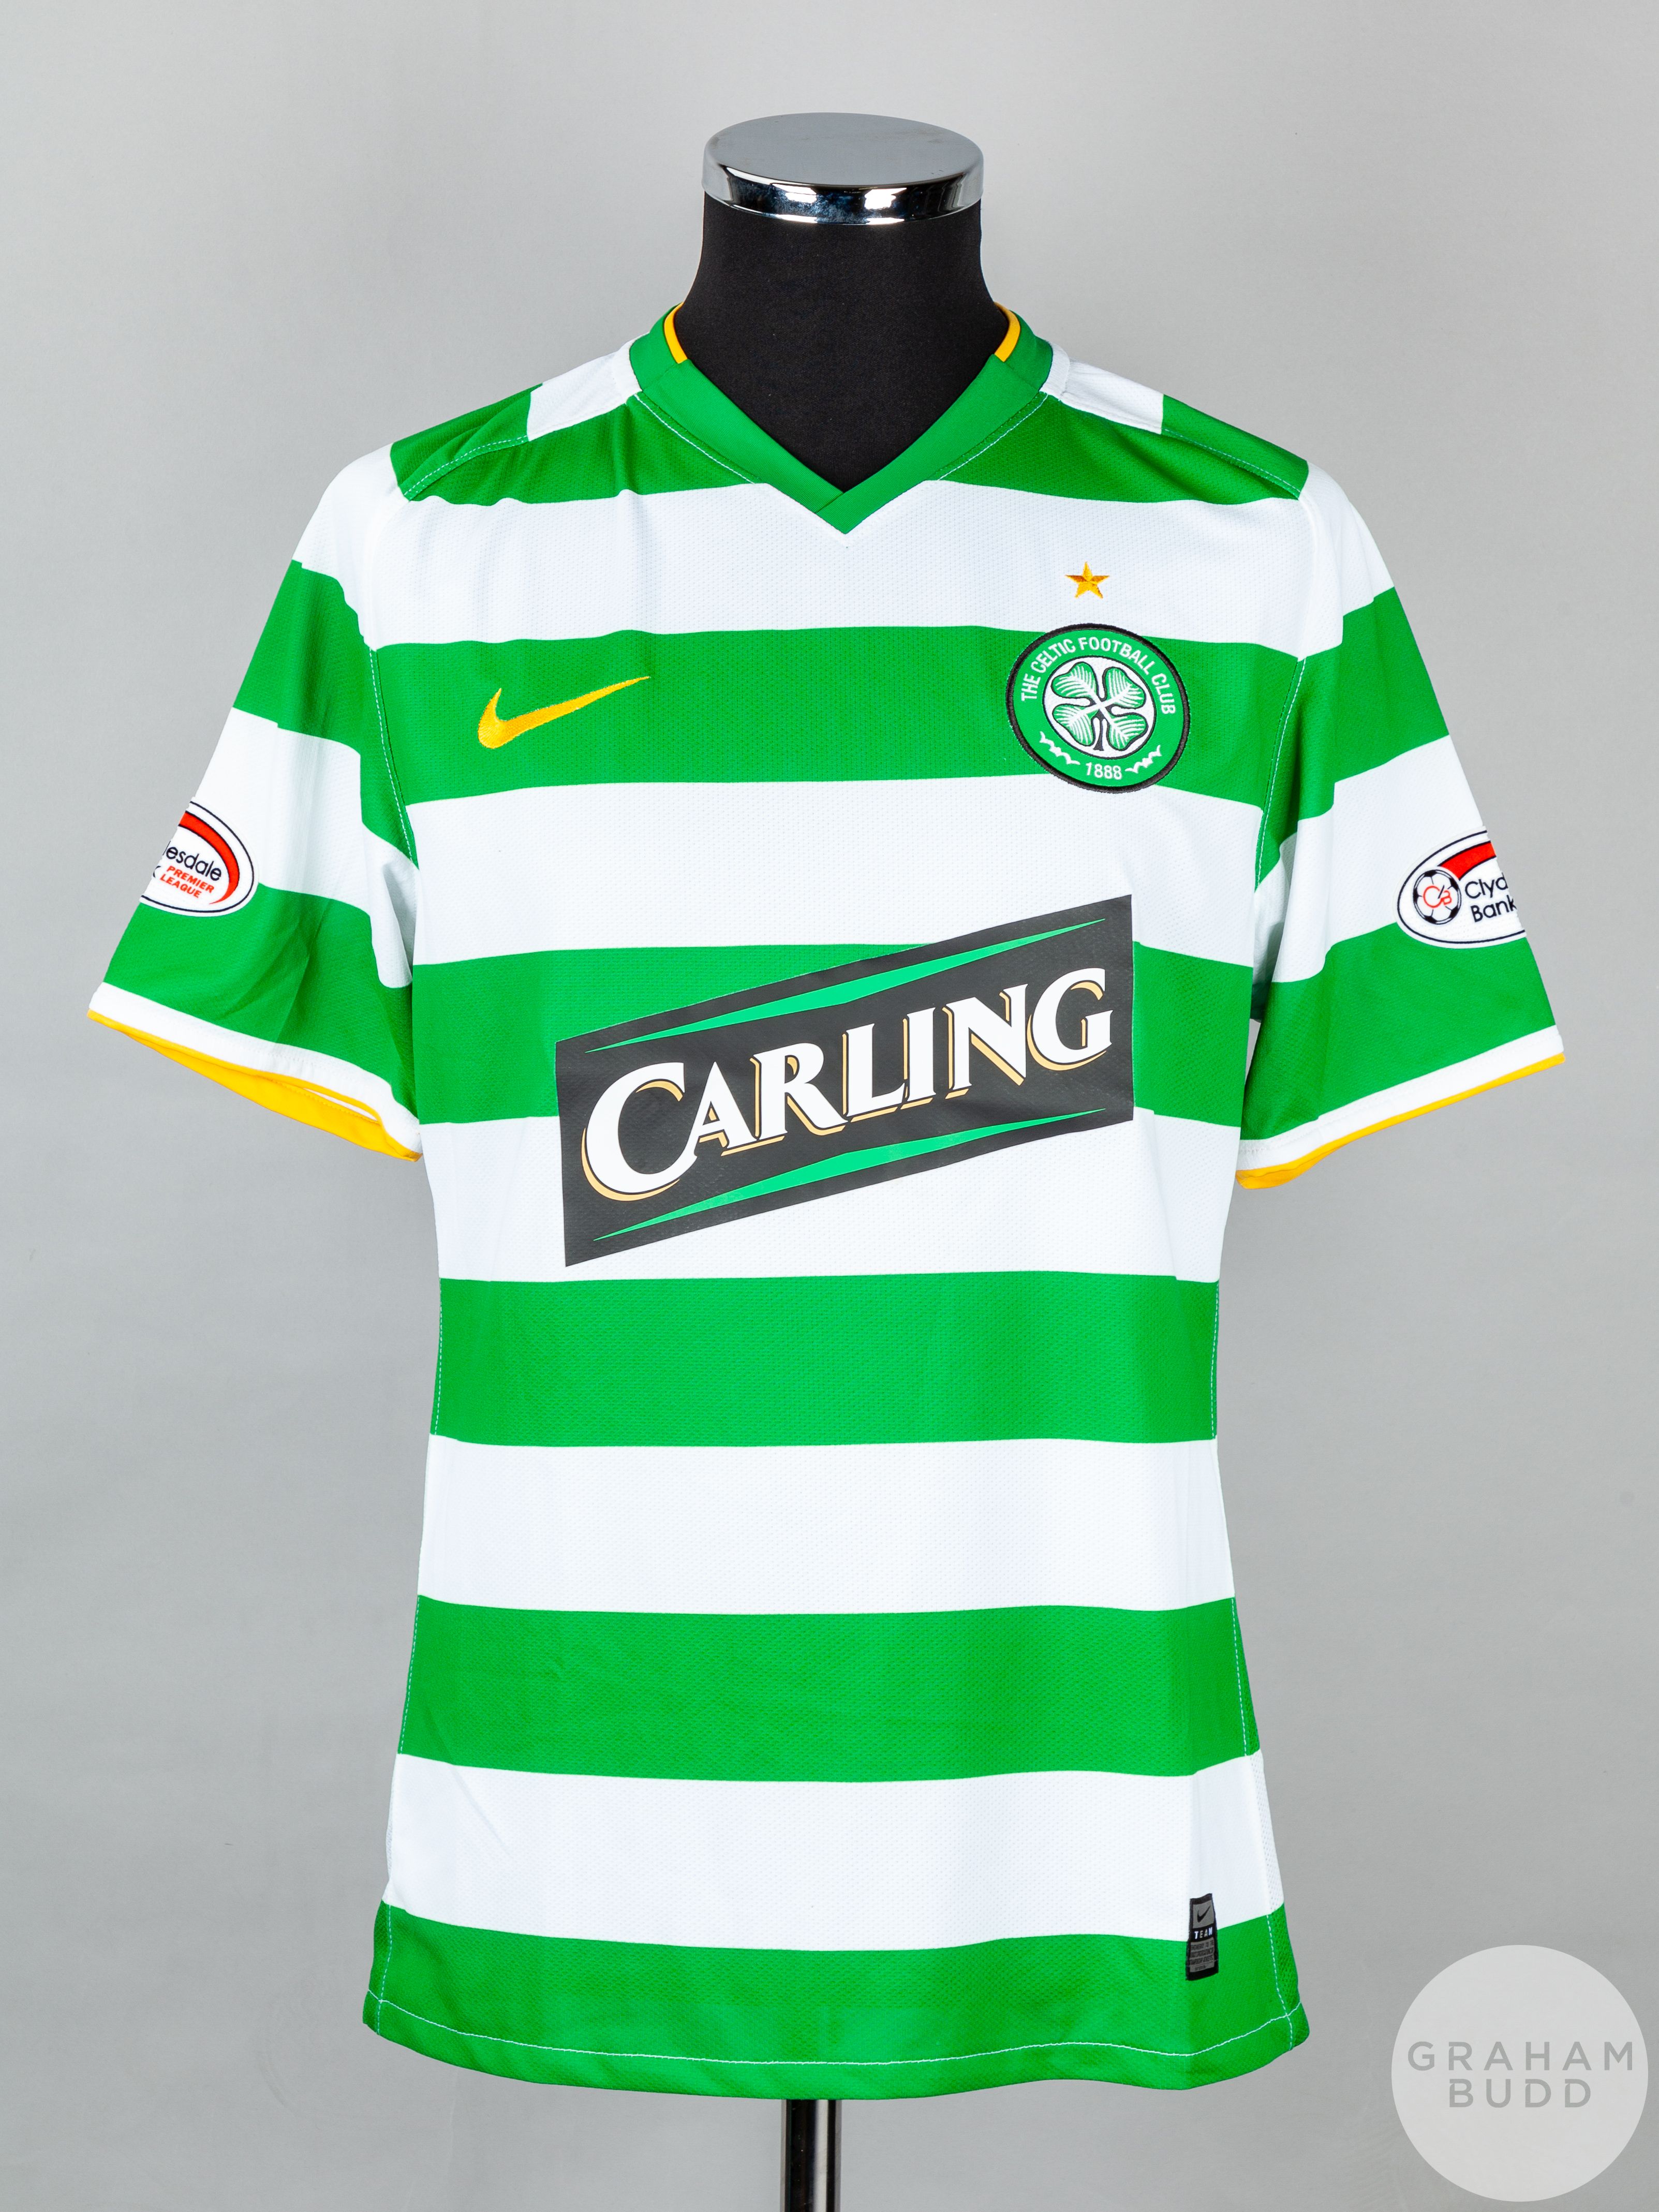 Robbie Keane green and white No.7 Celtic v. Aberdeen short-sleeved shirt